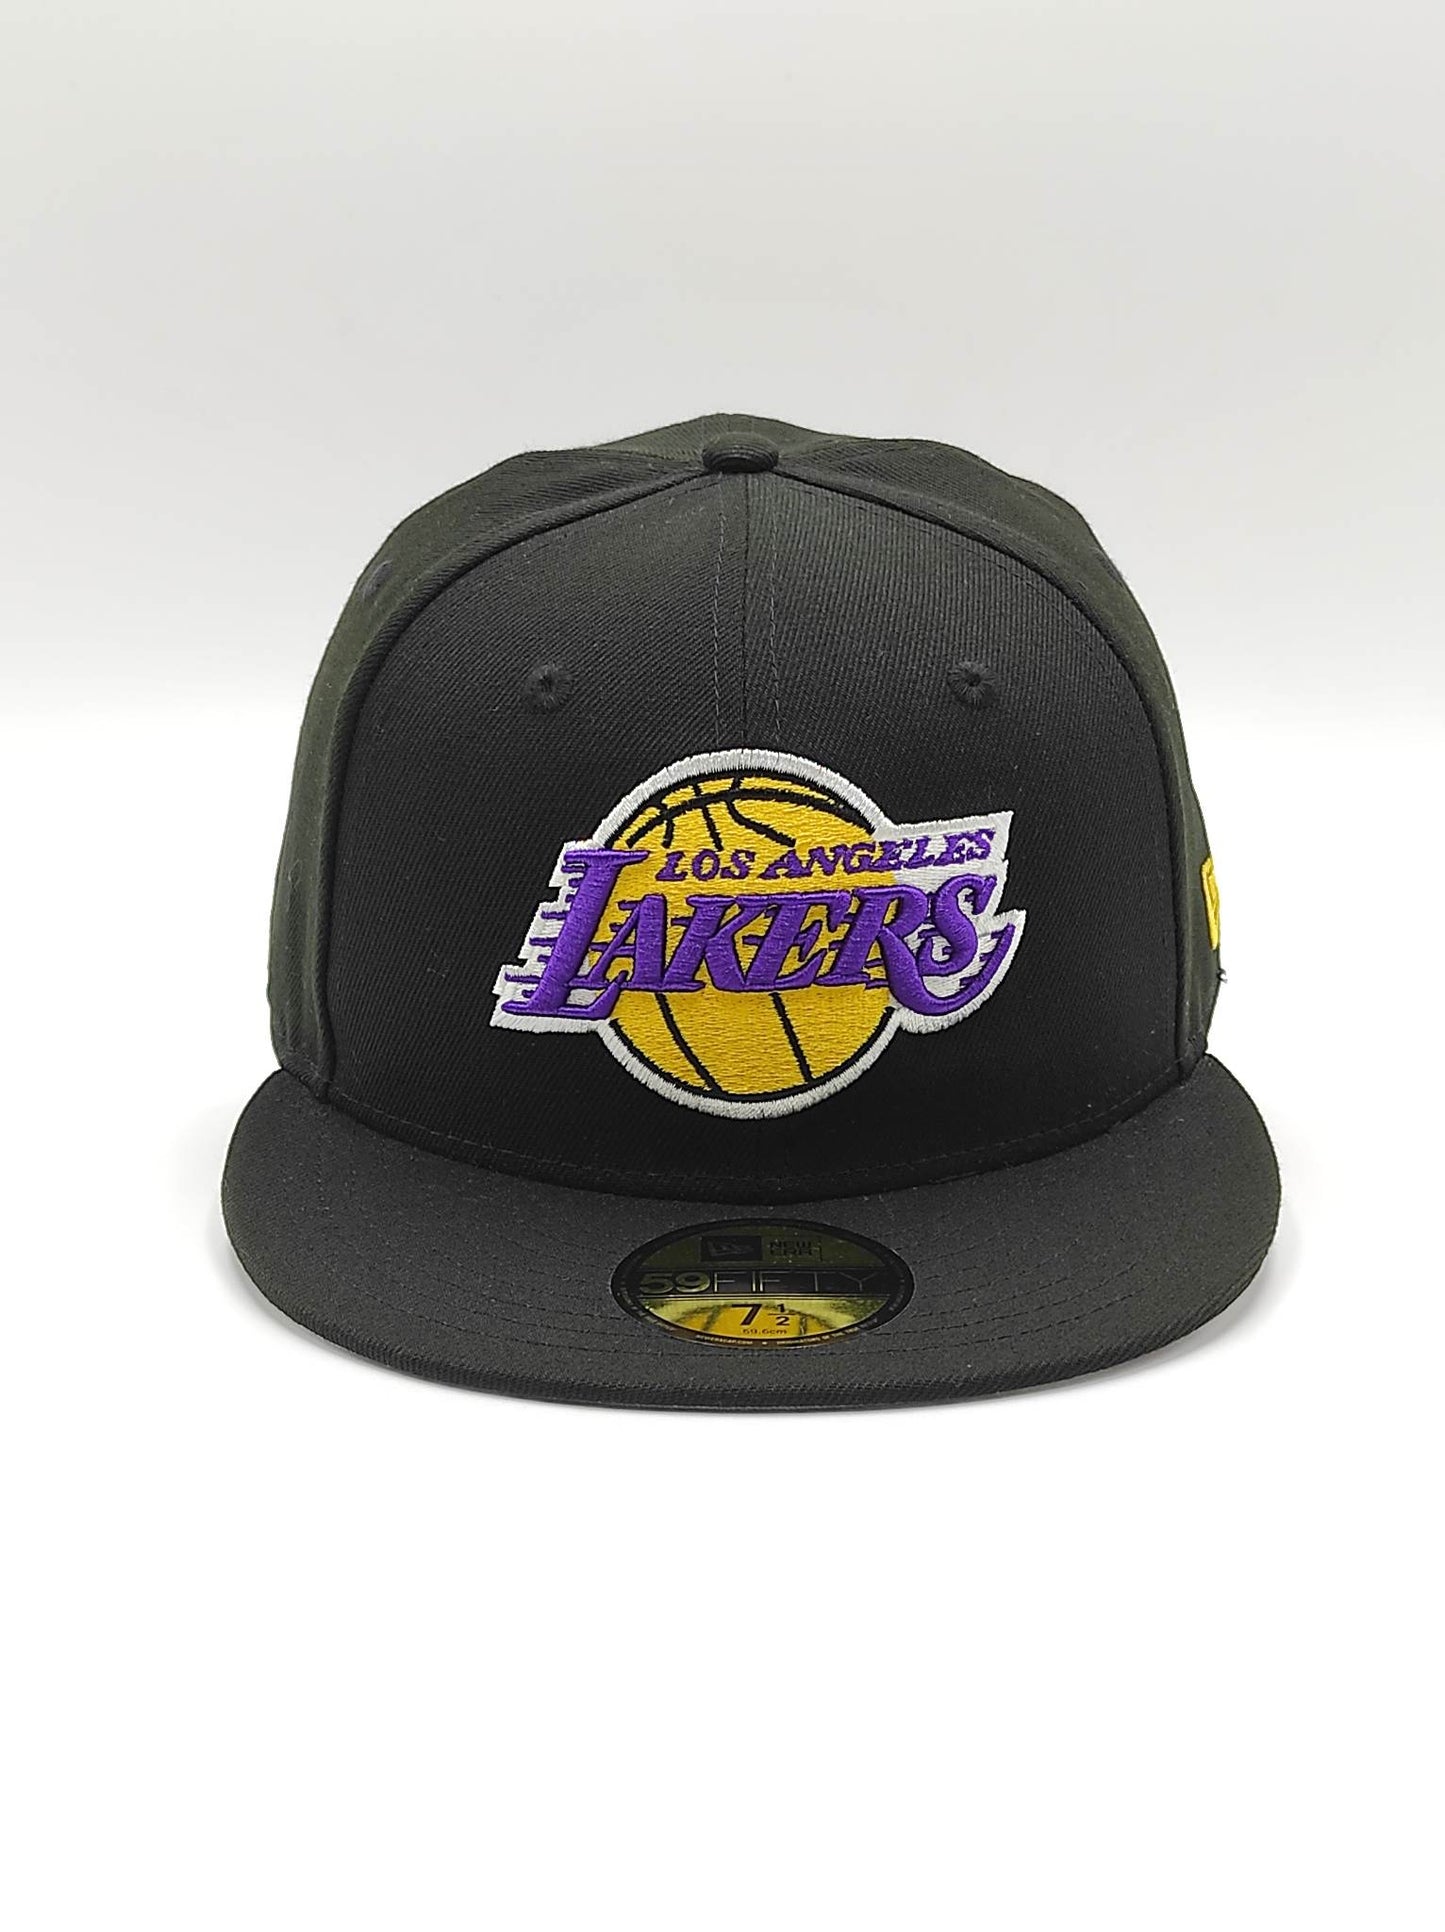 New Era Los Angeles Lakers 59fifty black